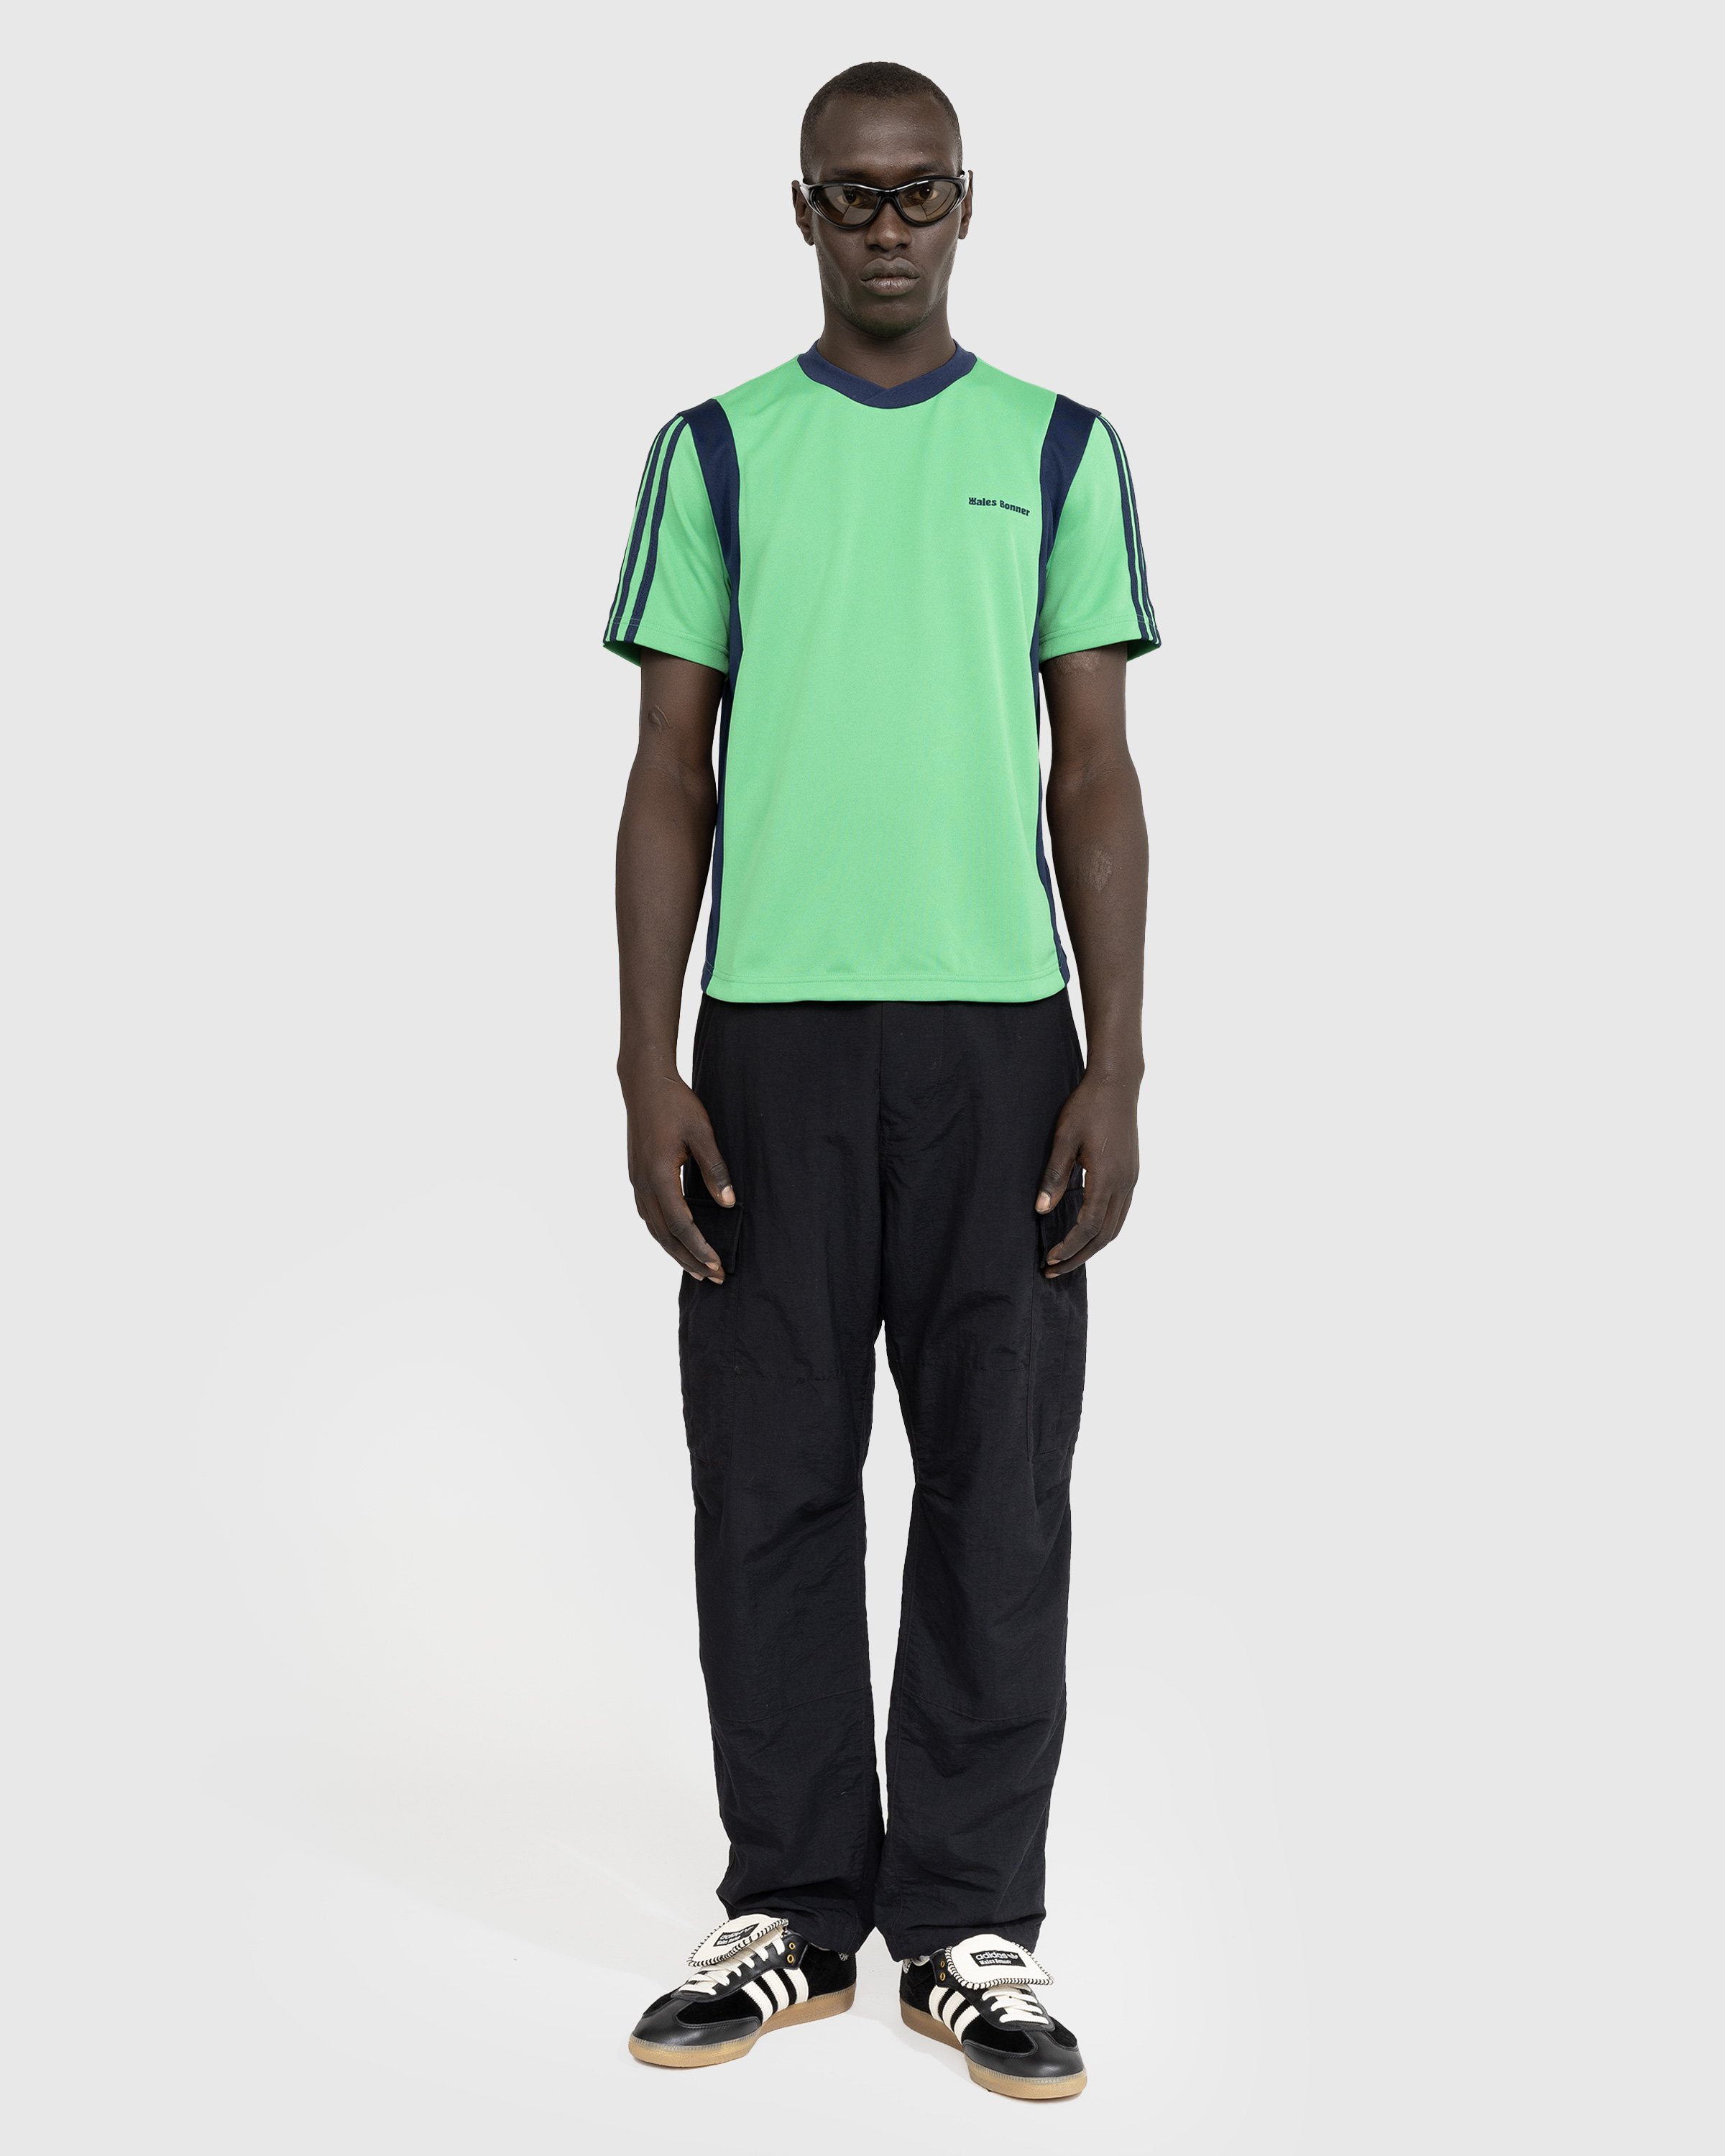 Adidas x Wales Bonner - WB FTBL SHIRT VIVGRN - Clothing - Green - Image 2